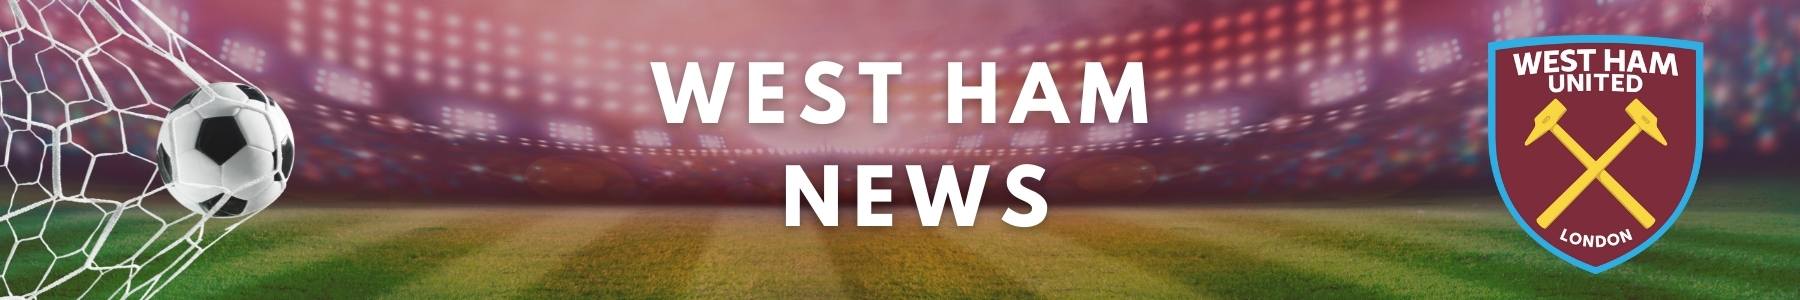 West Ham - Latest News